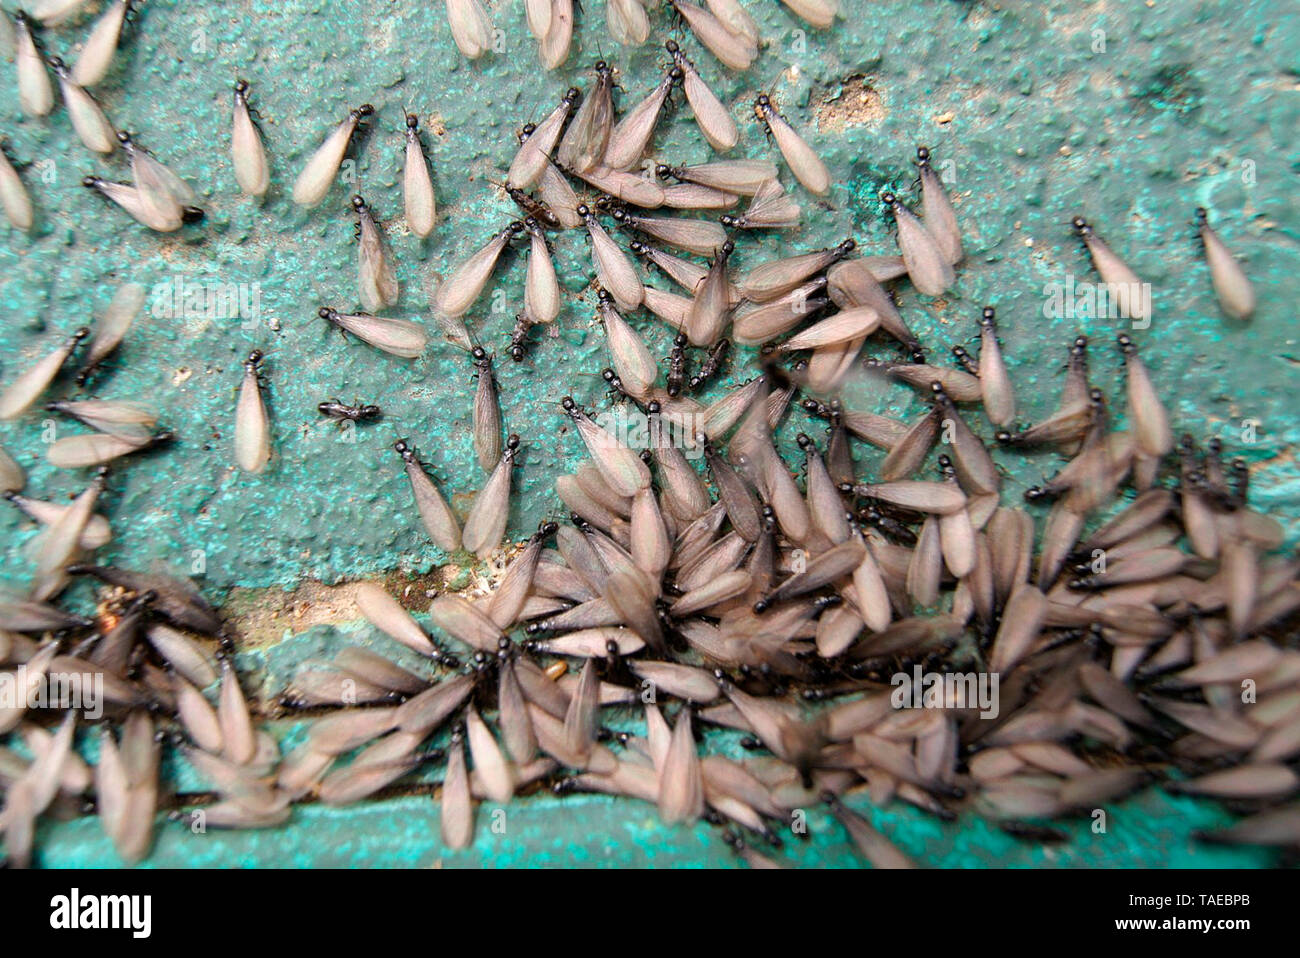 Multiple emergences of termites. Stock Photo